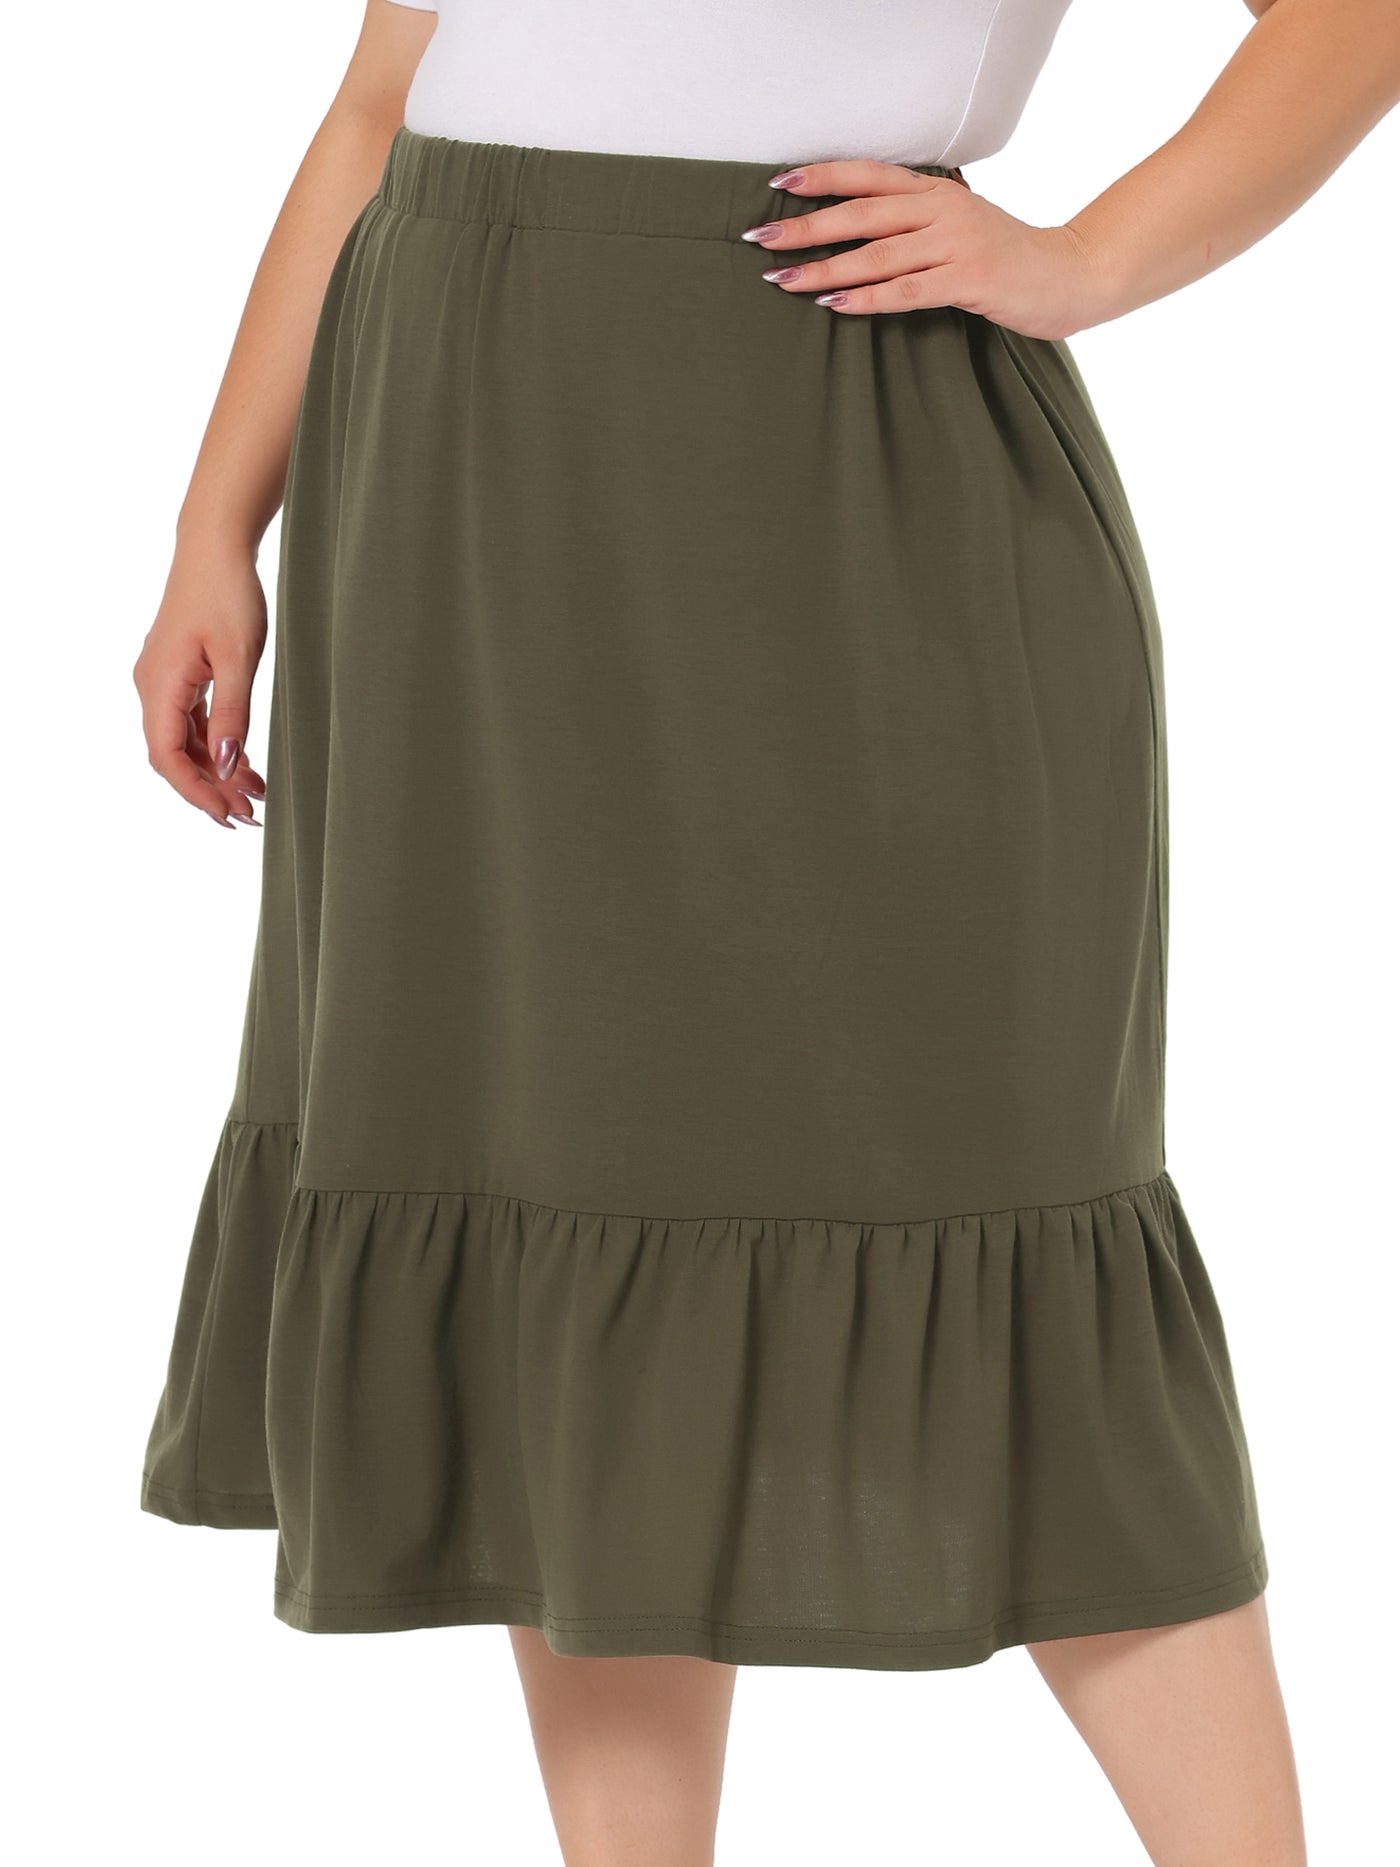 Bublédon Plus Size Half Ruffle Skirts for Women Elastic Waist Swing Casual Midi Vintage Underskirt